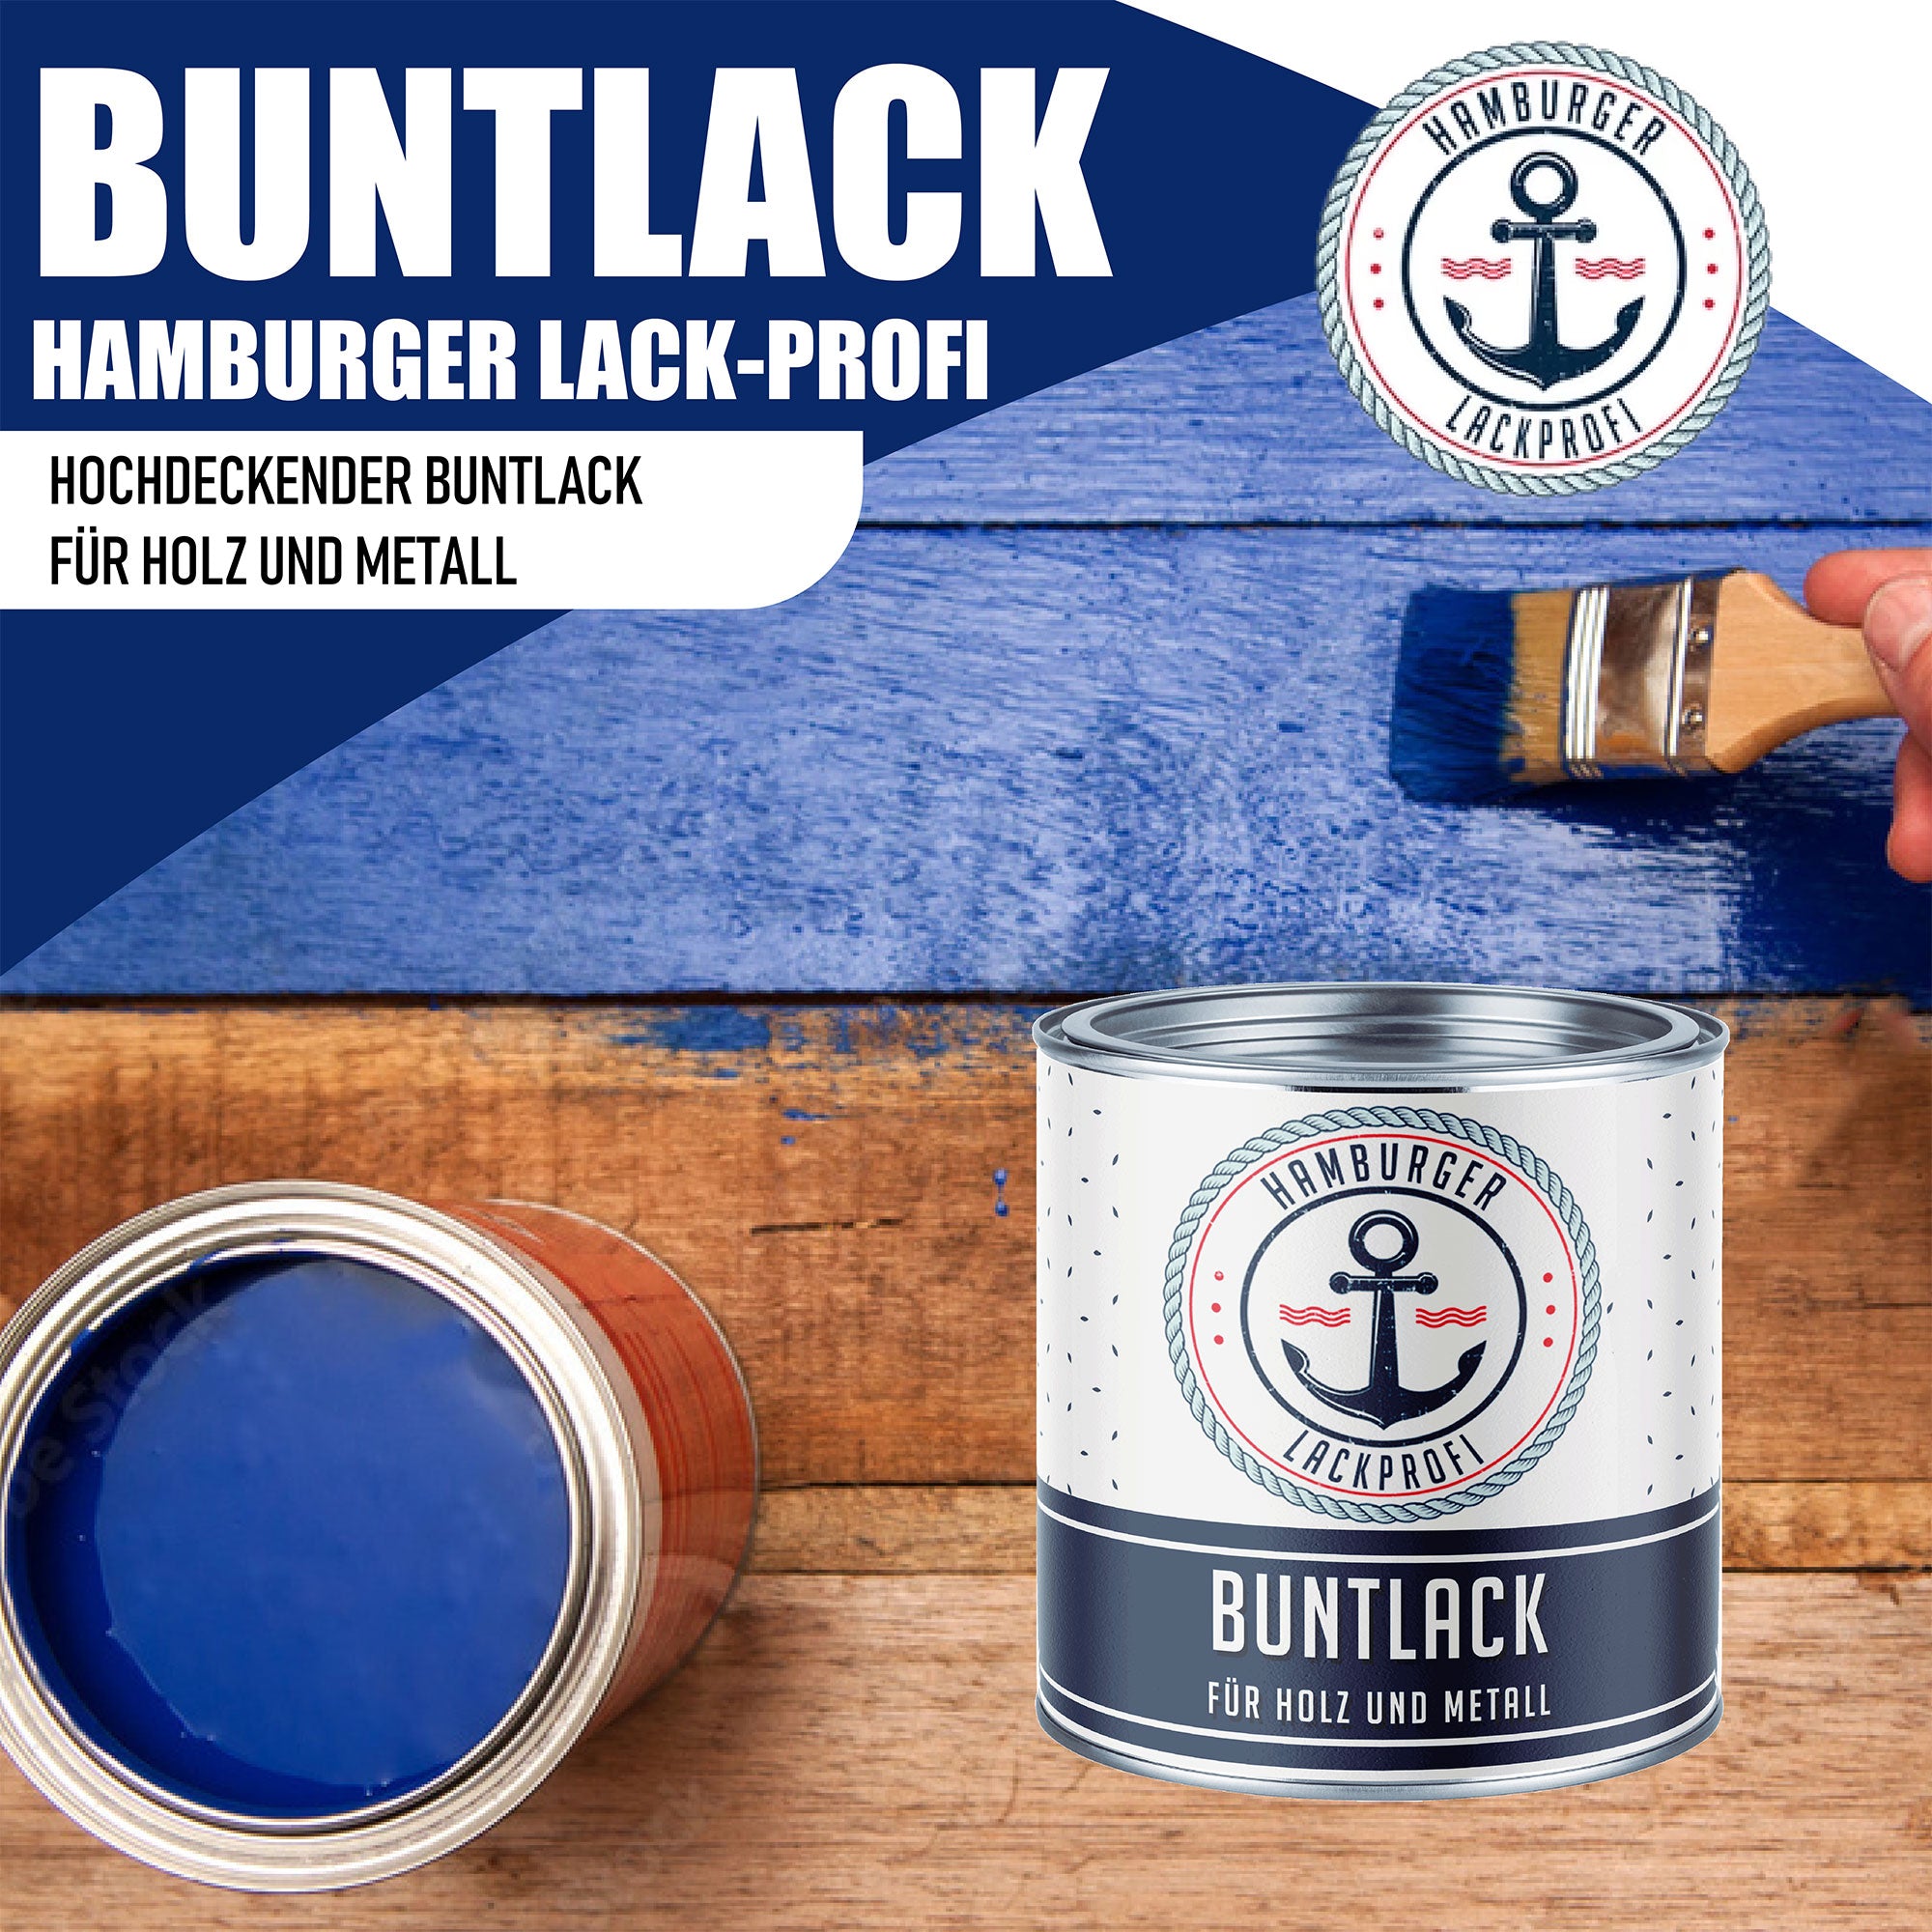 Hamburger Lack-Profi Buntlack in Platingrau RAL 7036 mit Lackierset (X300) & Verdünnung (1 L) - 30% Sparangebot